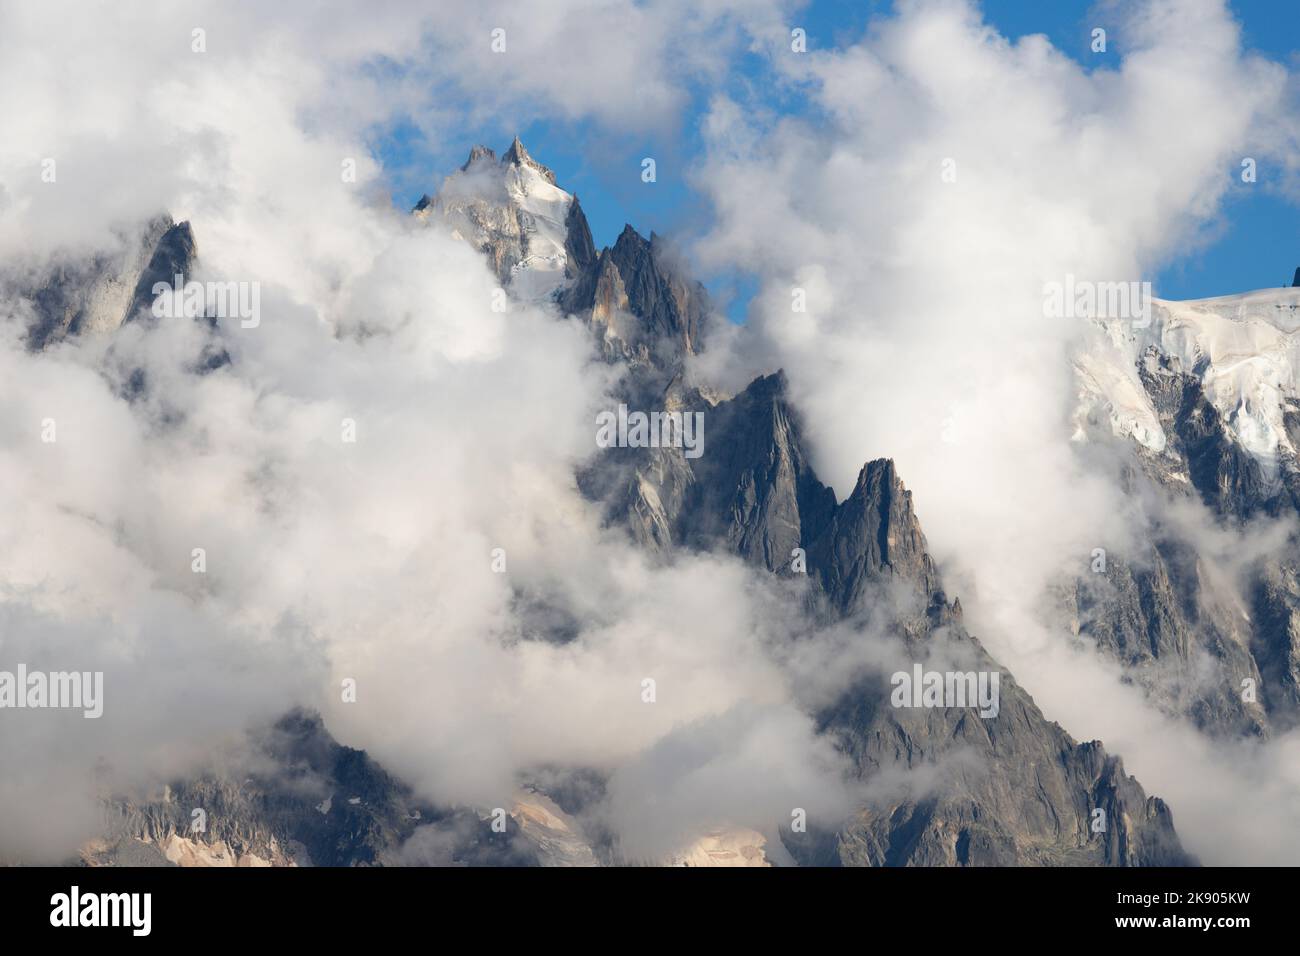 The peak Aiguille du Plan in the clouds - Chamonix - Mont Blanc massif. Stock Photo